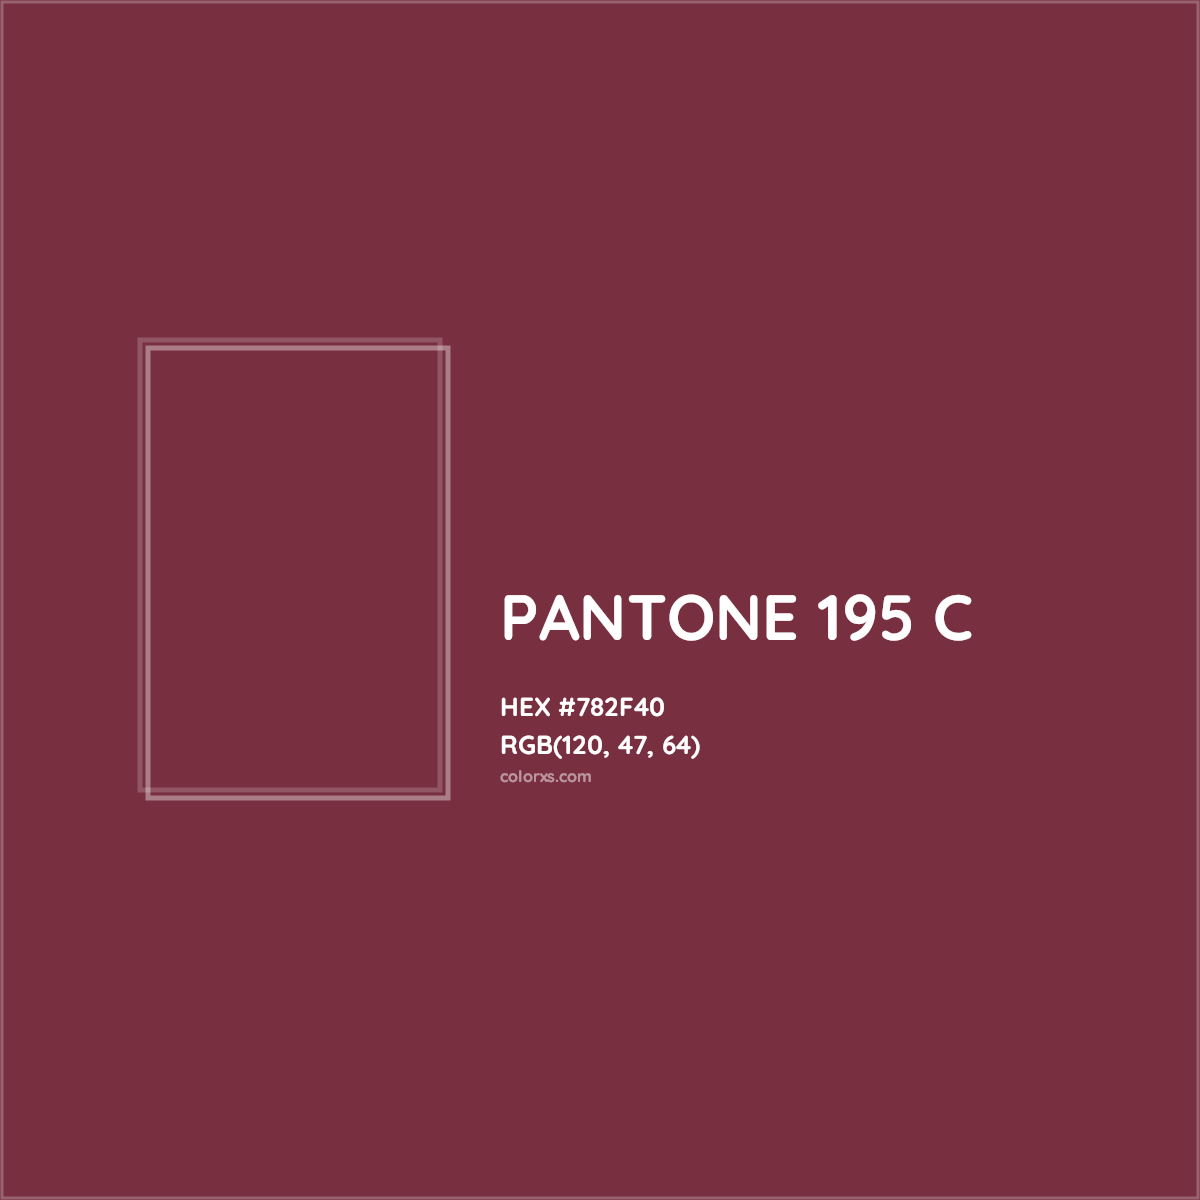 HEX #782F40 PANTONE 195 C CMS Pantone PMS - Color Code